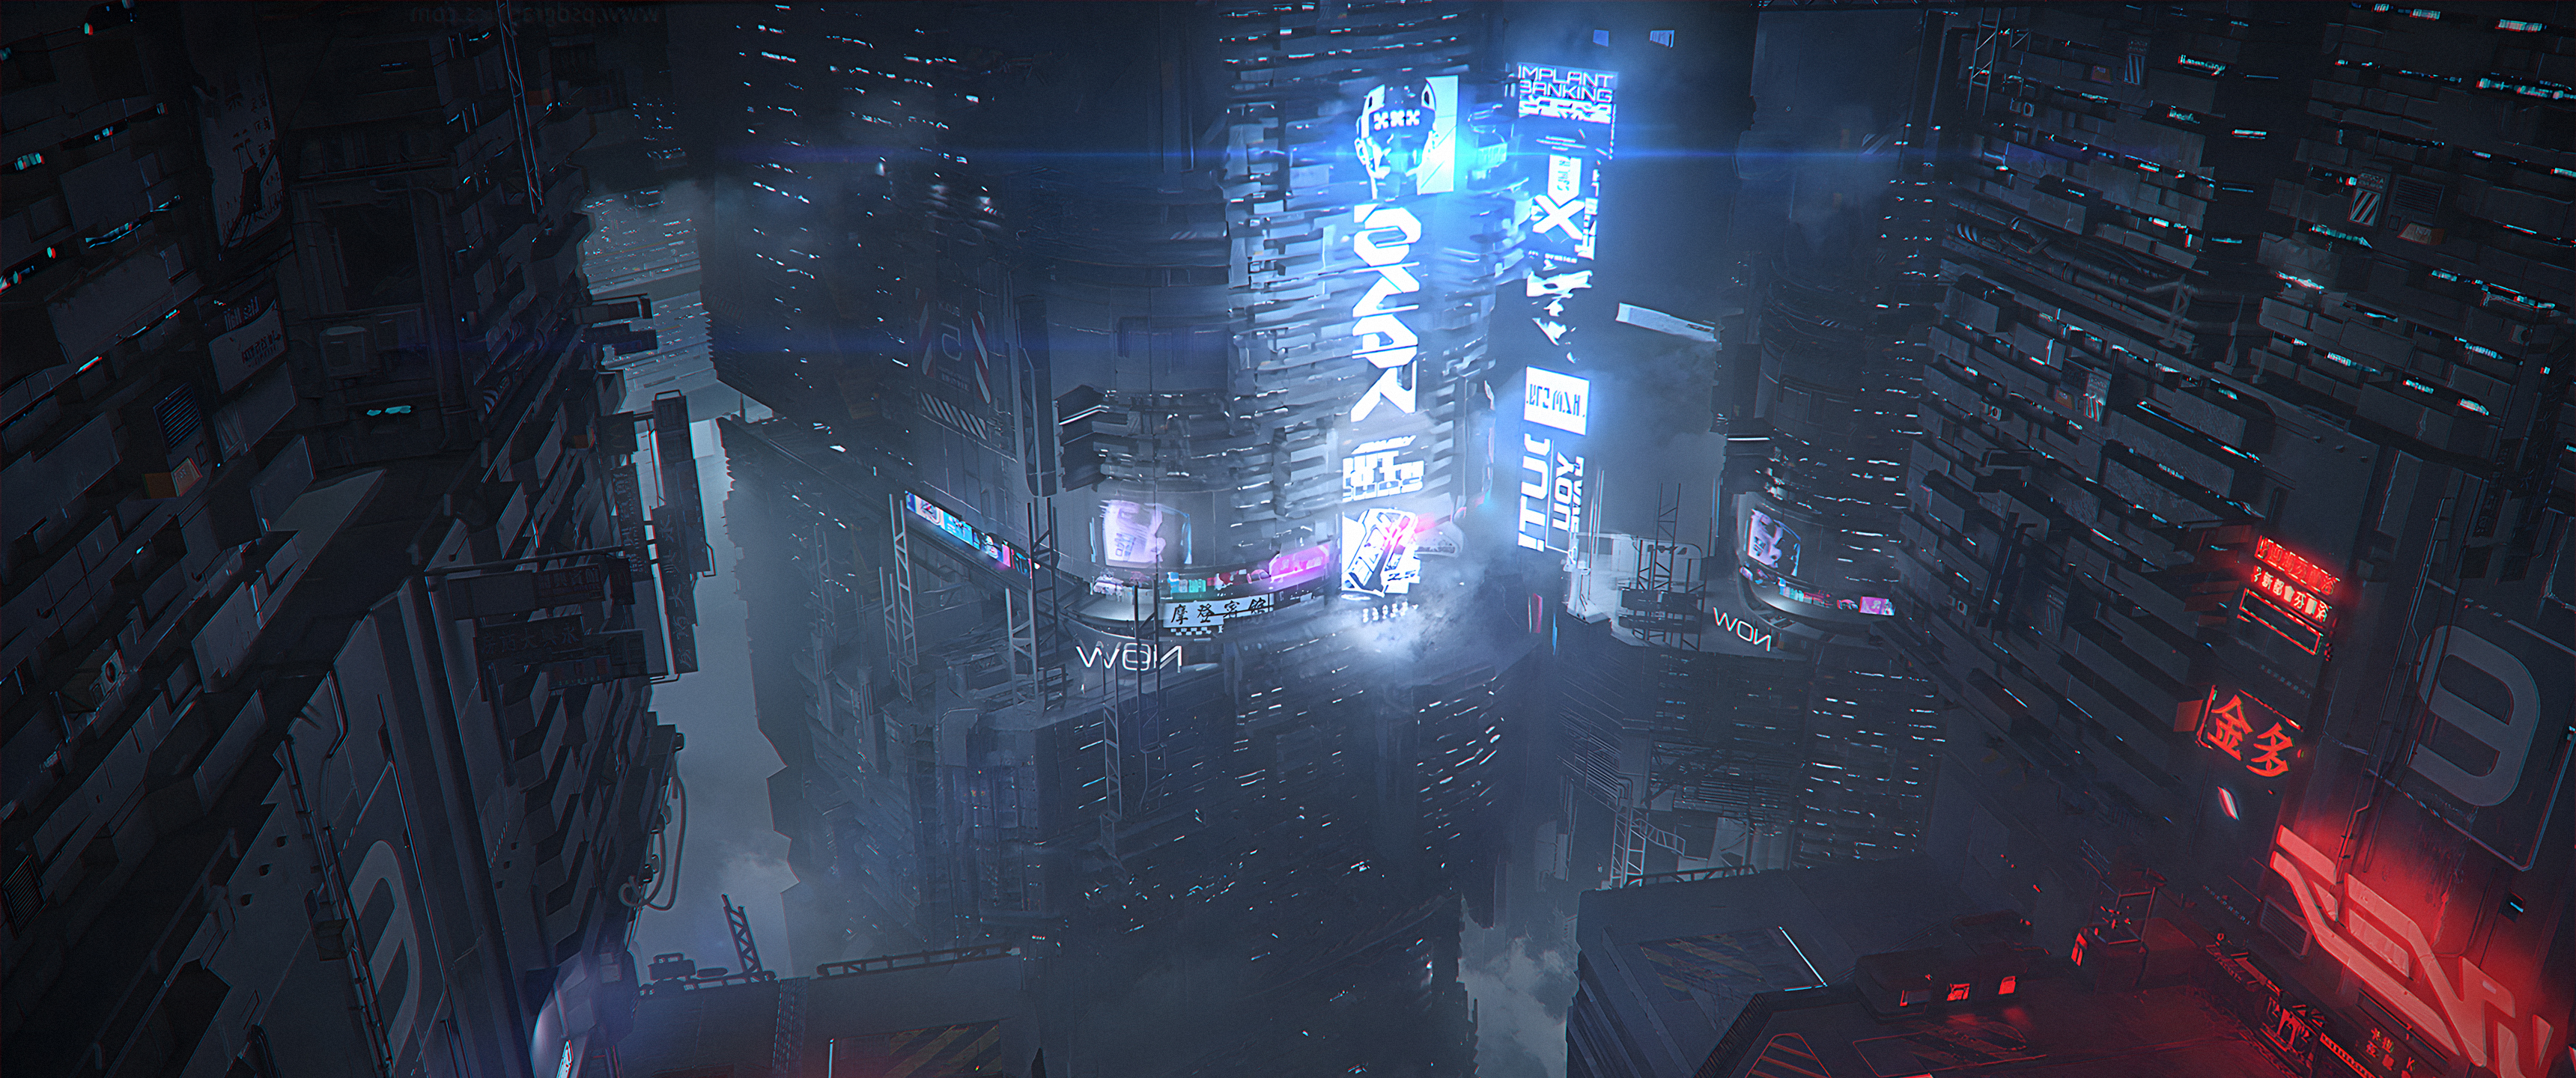 General 3440x1440 Ghostrunner 2 505 Games ultrawide cyberpunk futuristic city concept art video games video game art city lights